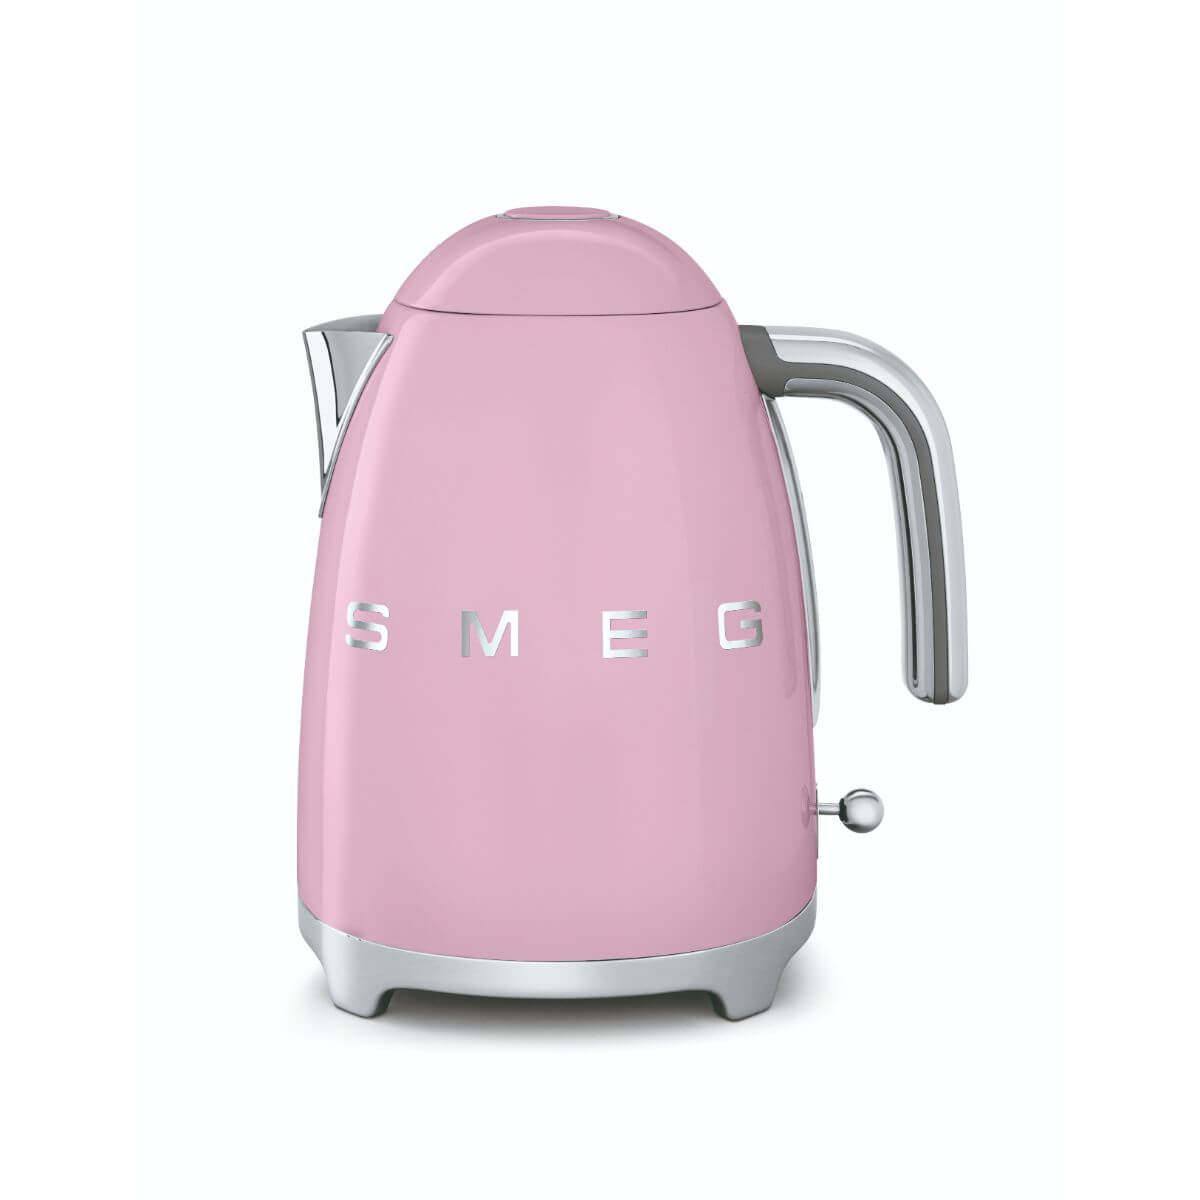 SMEG 50's Style Kettle - Pink Color